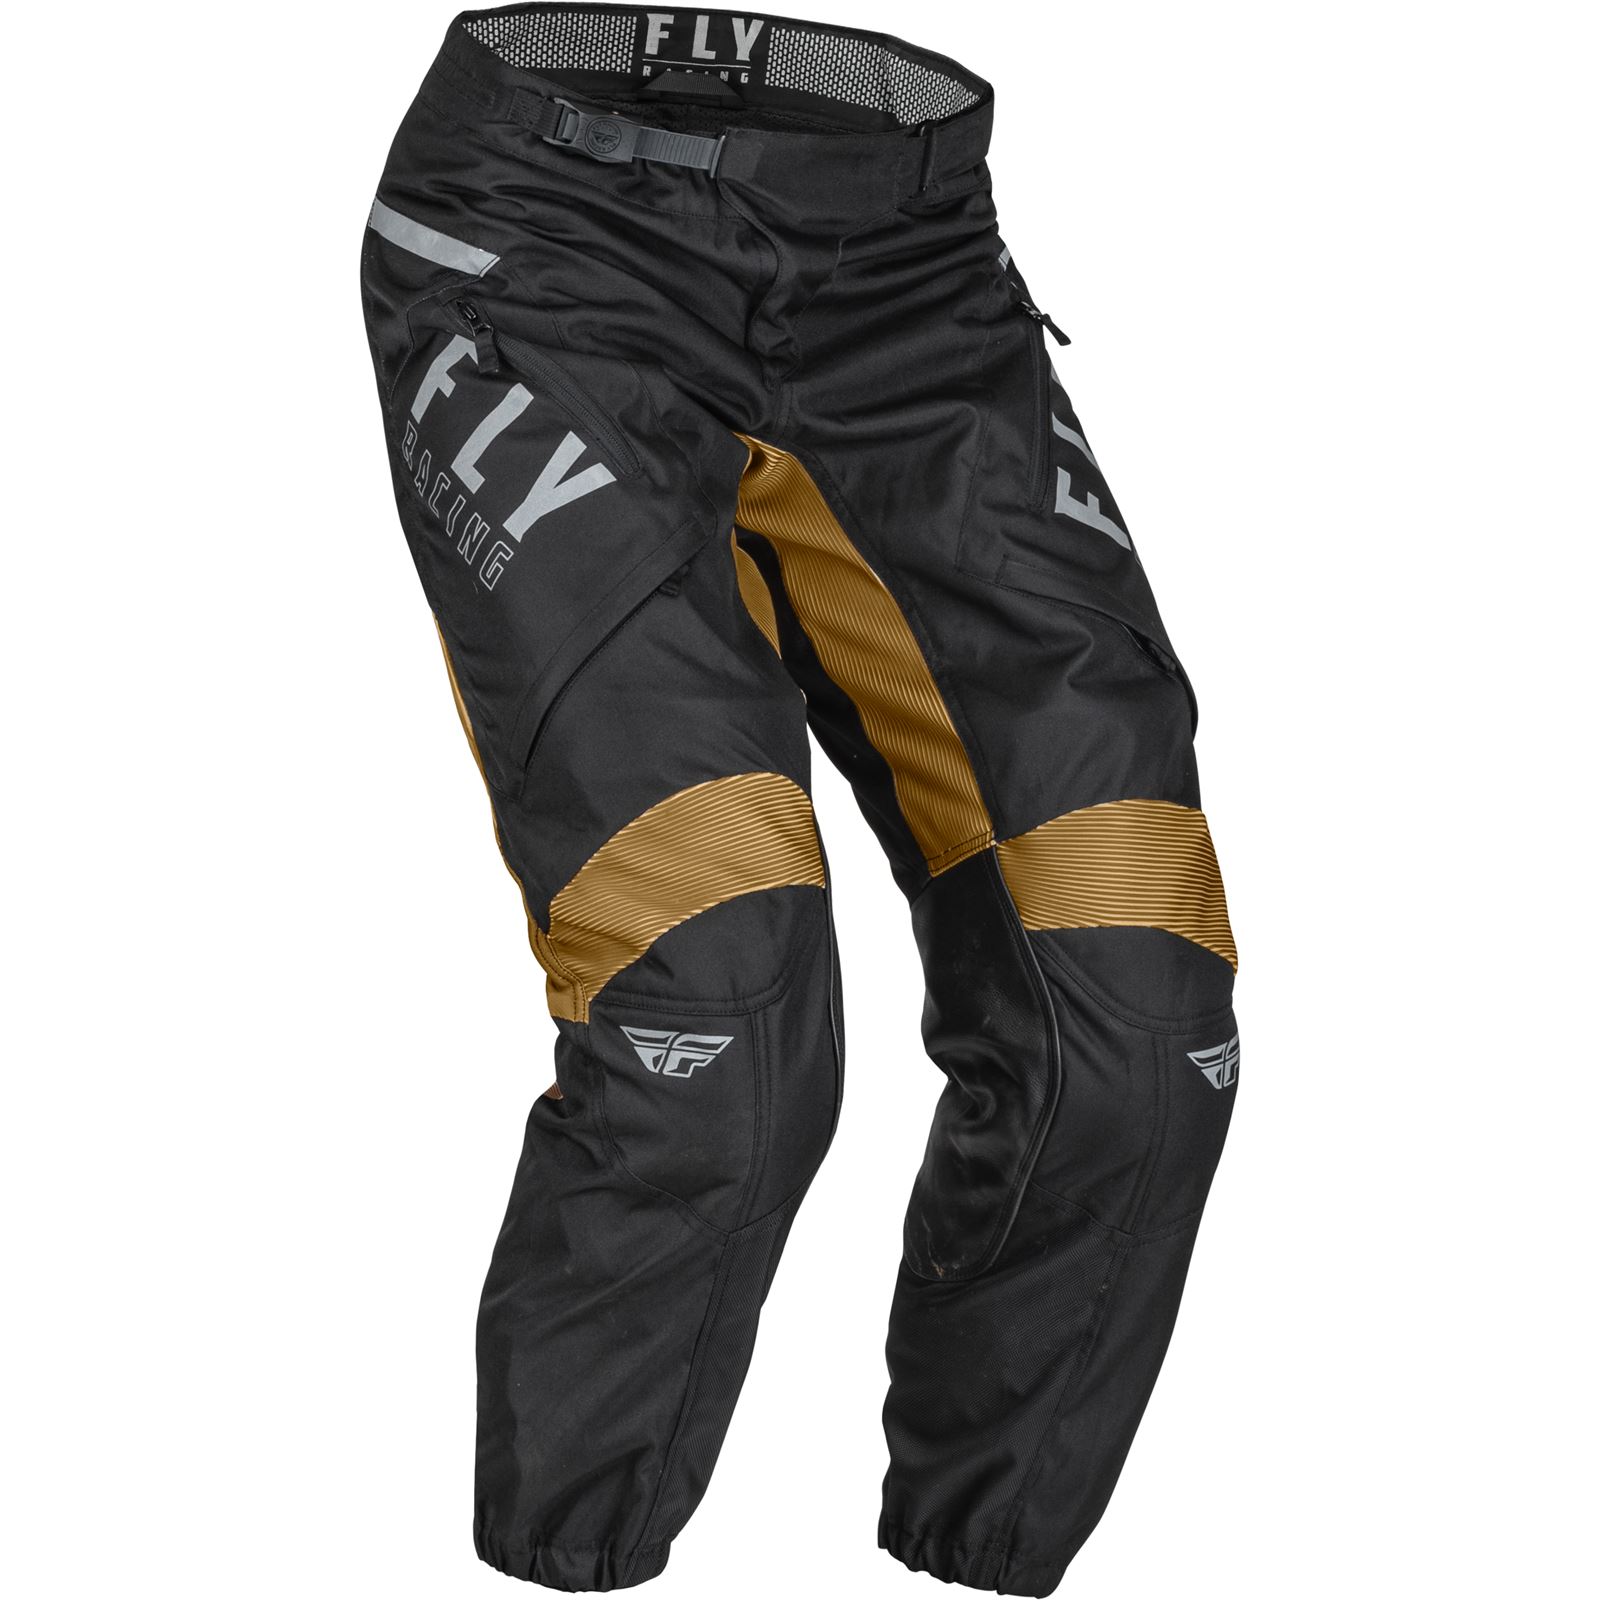 Fly Racing Patrol Pants - Caramel/Black - Size 38 - Motorcycle, ATV ...